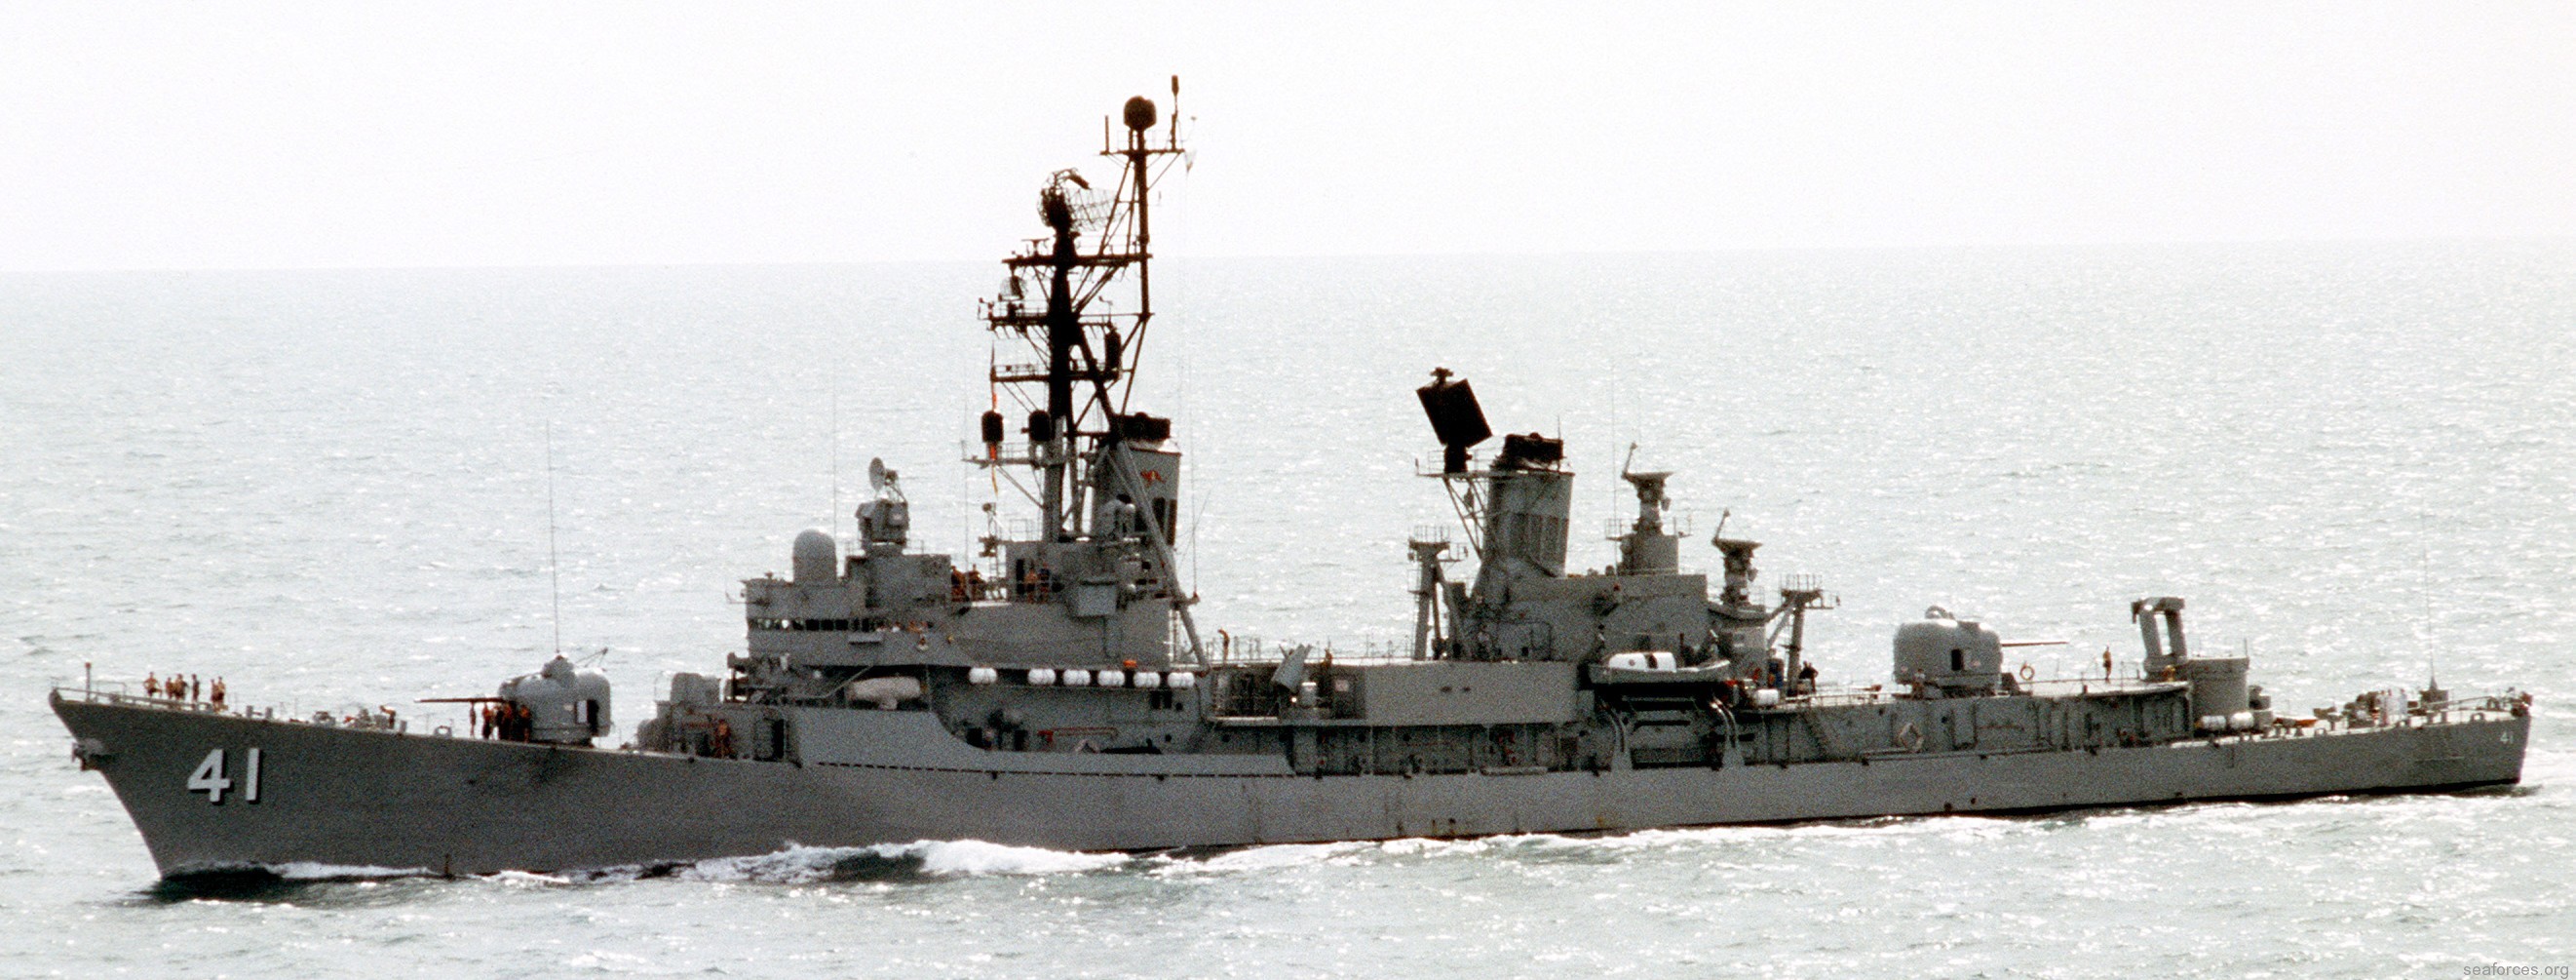 hmas brisbane ddg-41 perth class guided missile destroyer royal australian navy 02